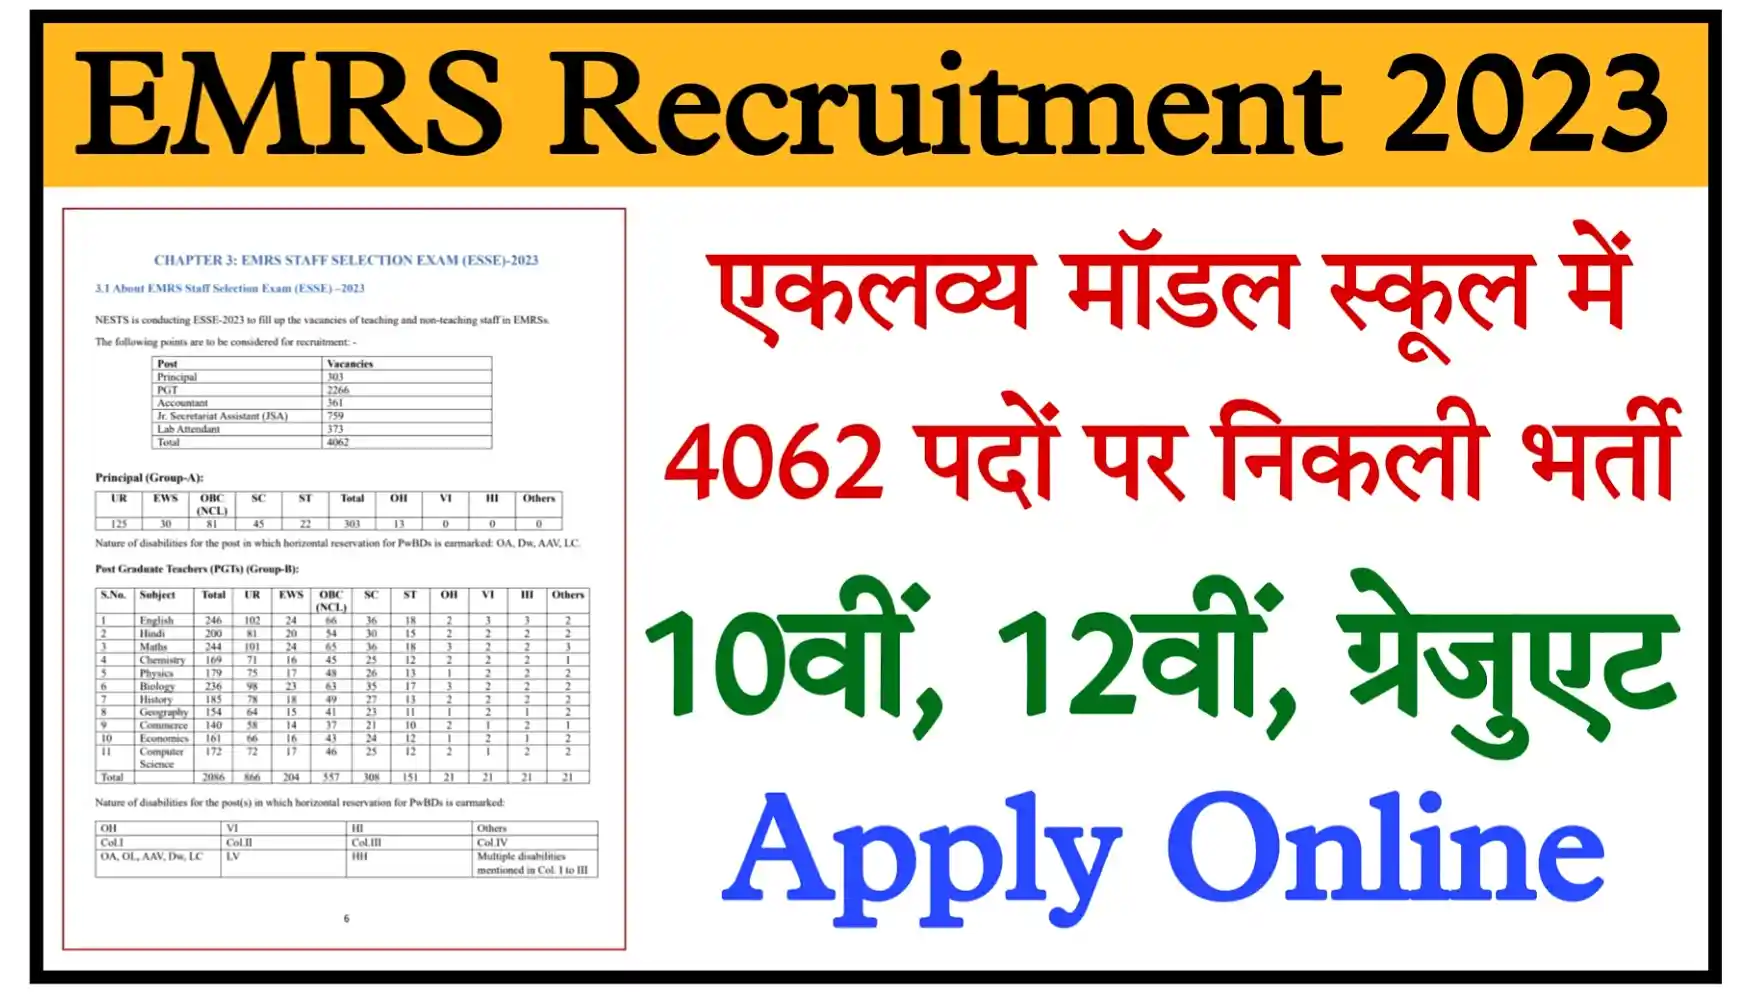 EMRS Recruitment 2023 Notification, Apply Online (4062 Posts) Exam Date, Syllabus Visit All Details